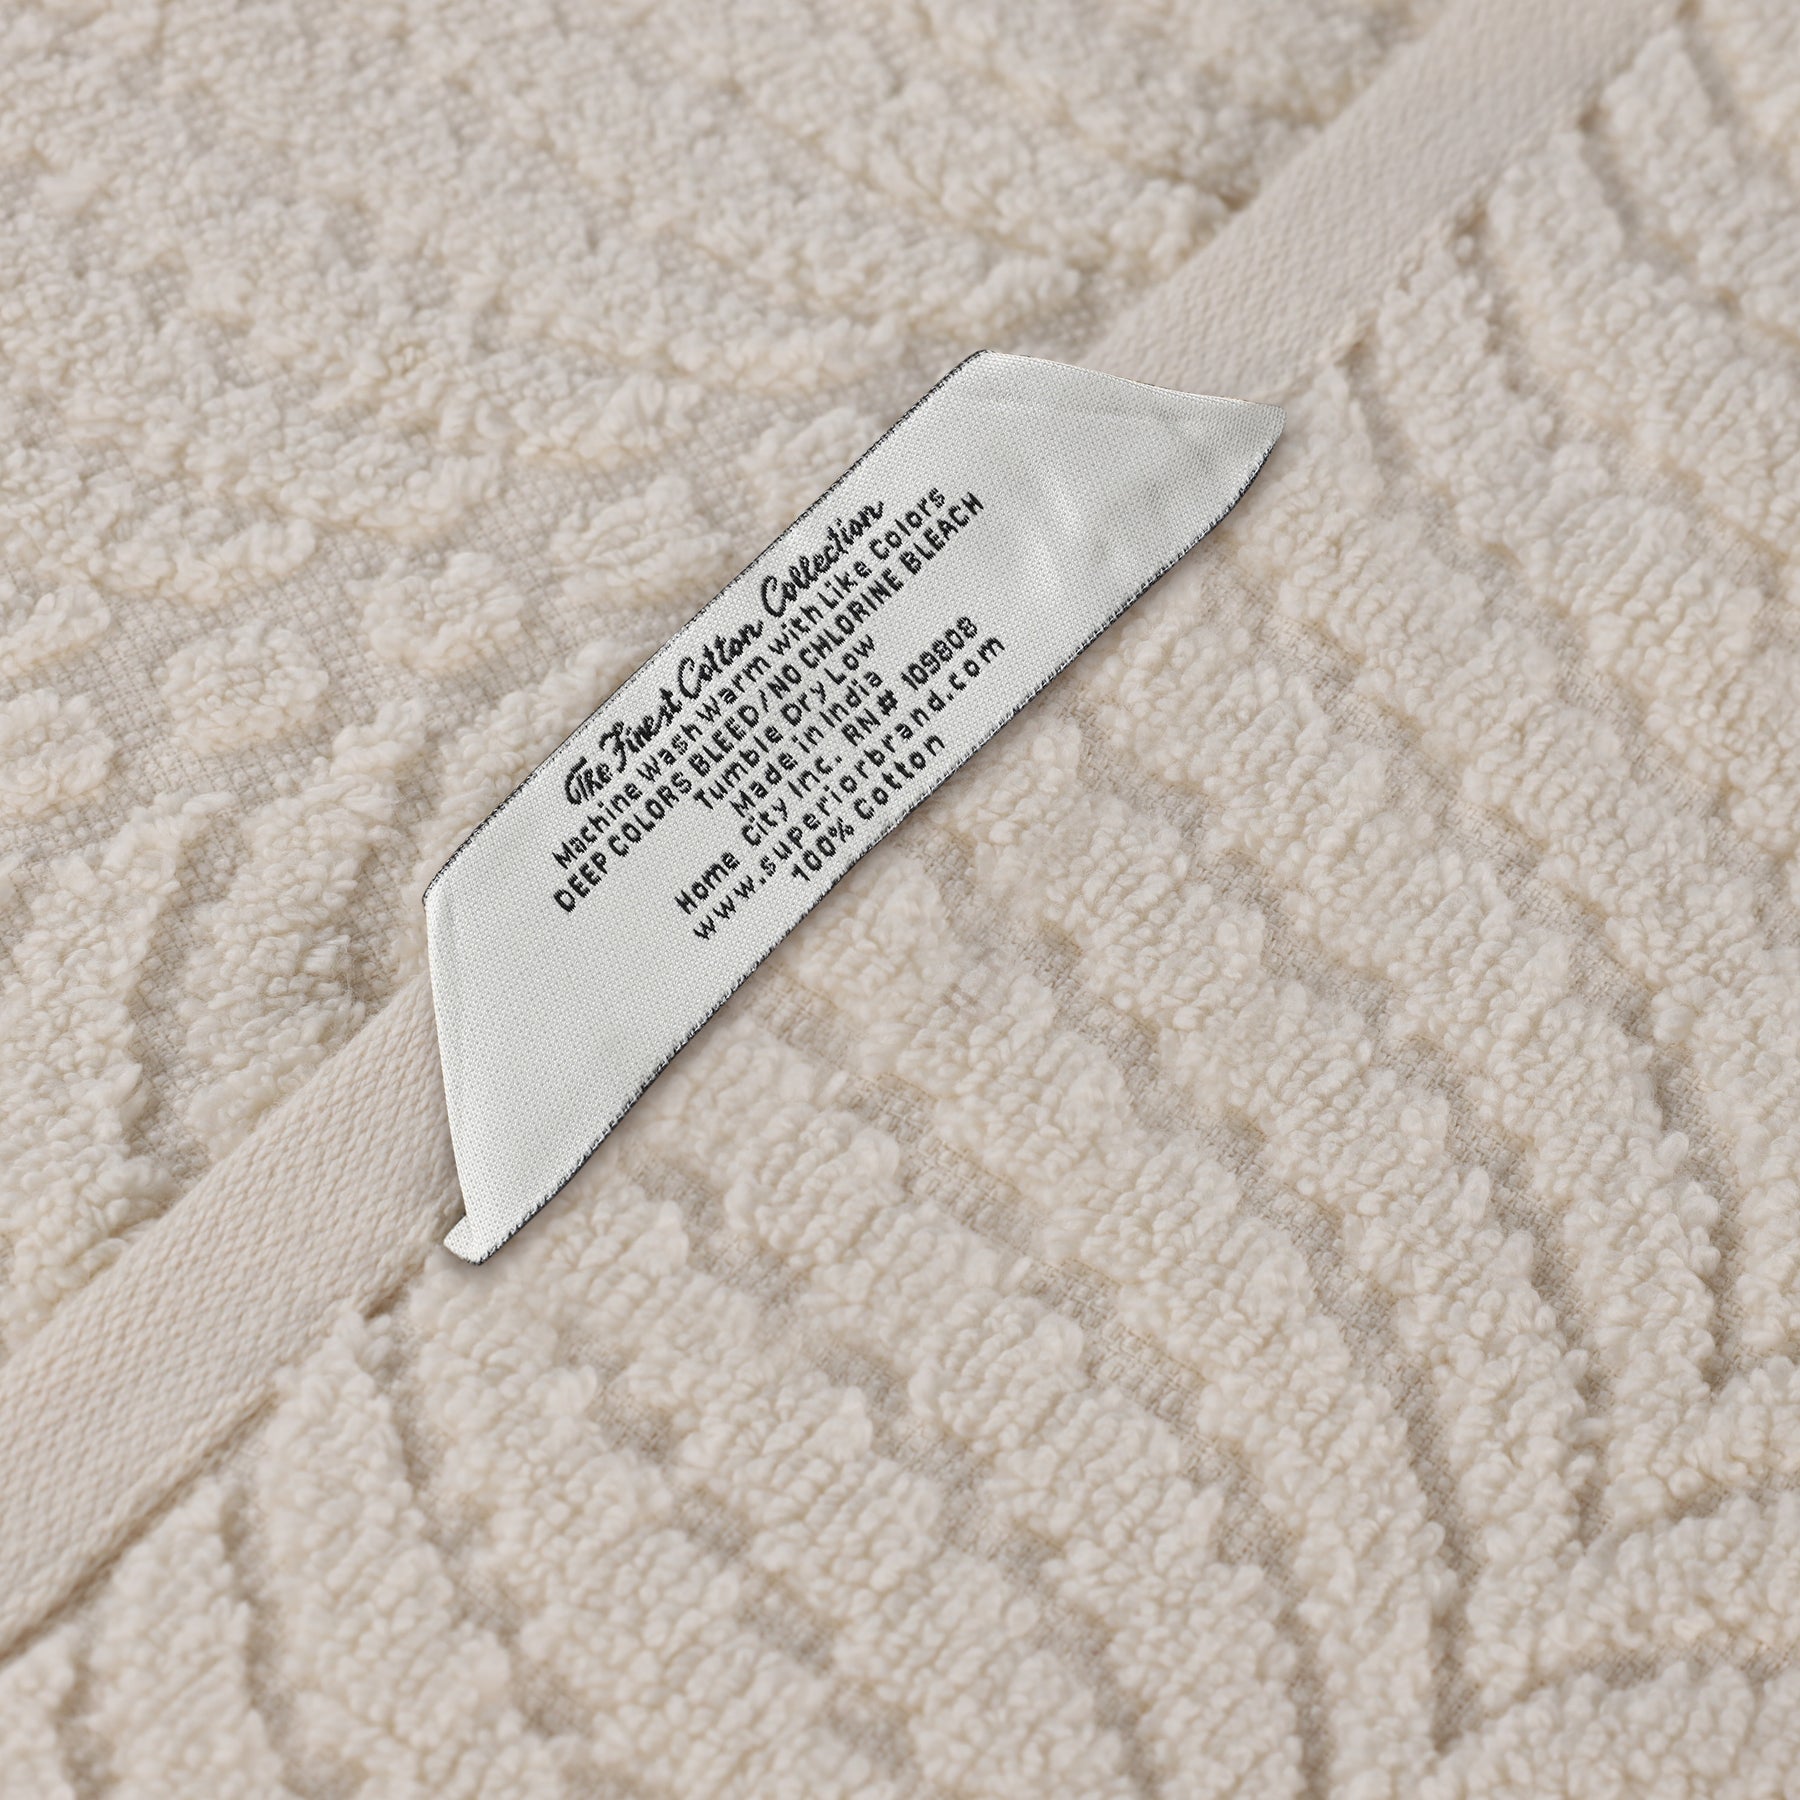 Chevron Zero Twist Cotton Solid and Jacquard Bath Sheet - Ivory